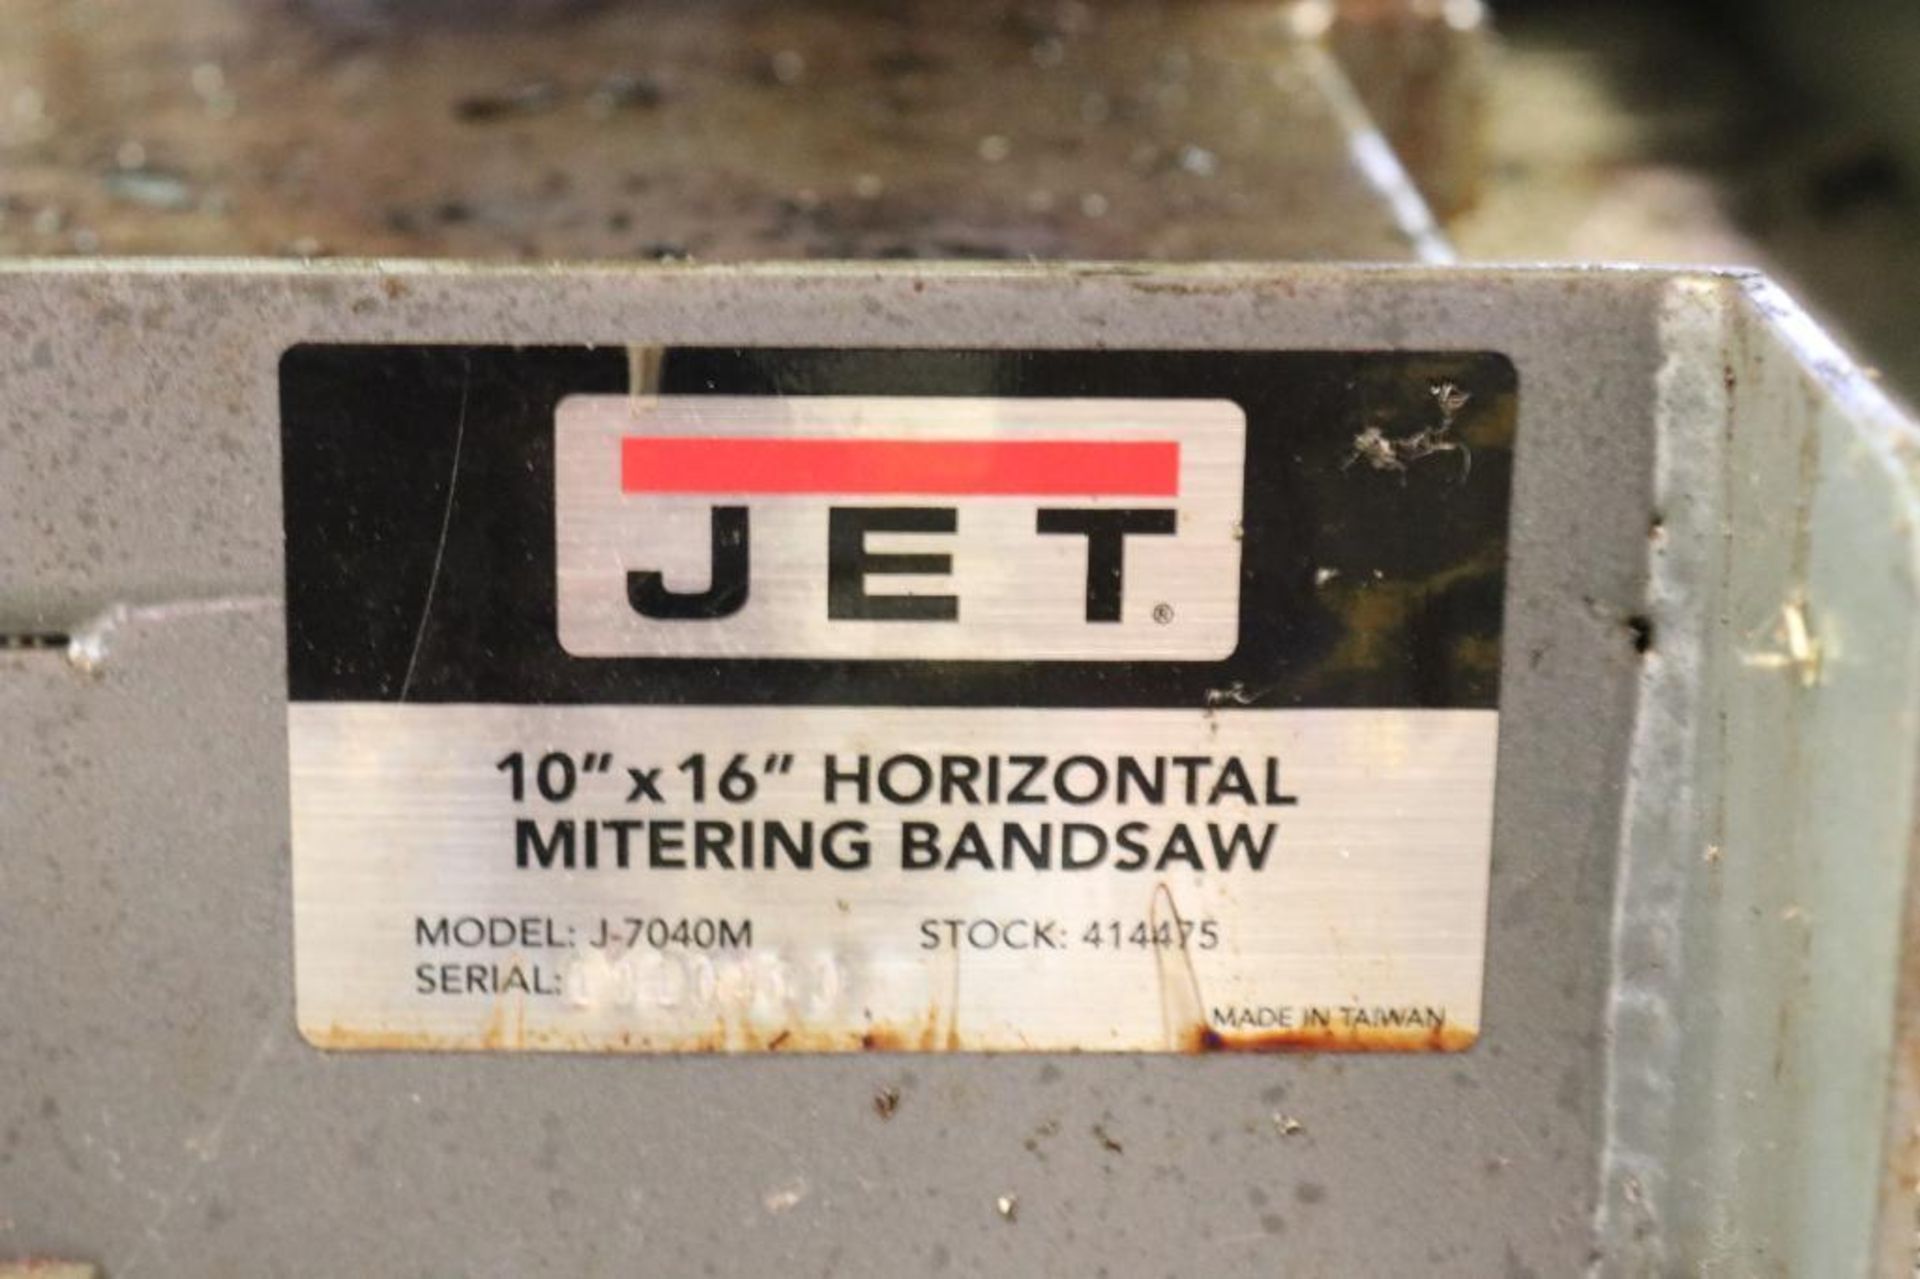 2019 Jet Model J-7040M Horizontal Metal Cutting Bandsaw Stock Number: 414475 Serial No: 1910960 10" - Image 11 of 16